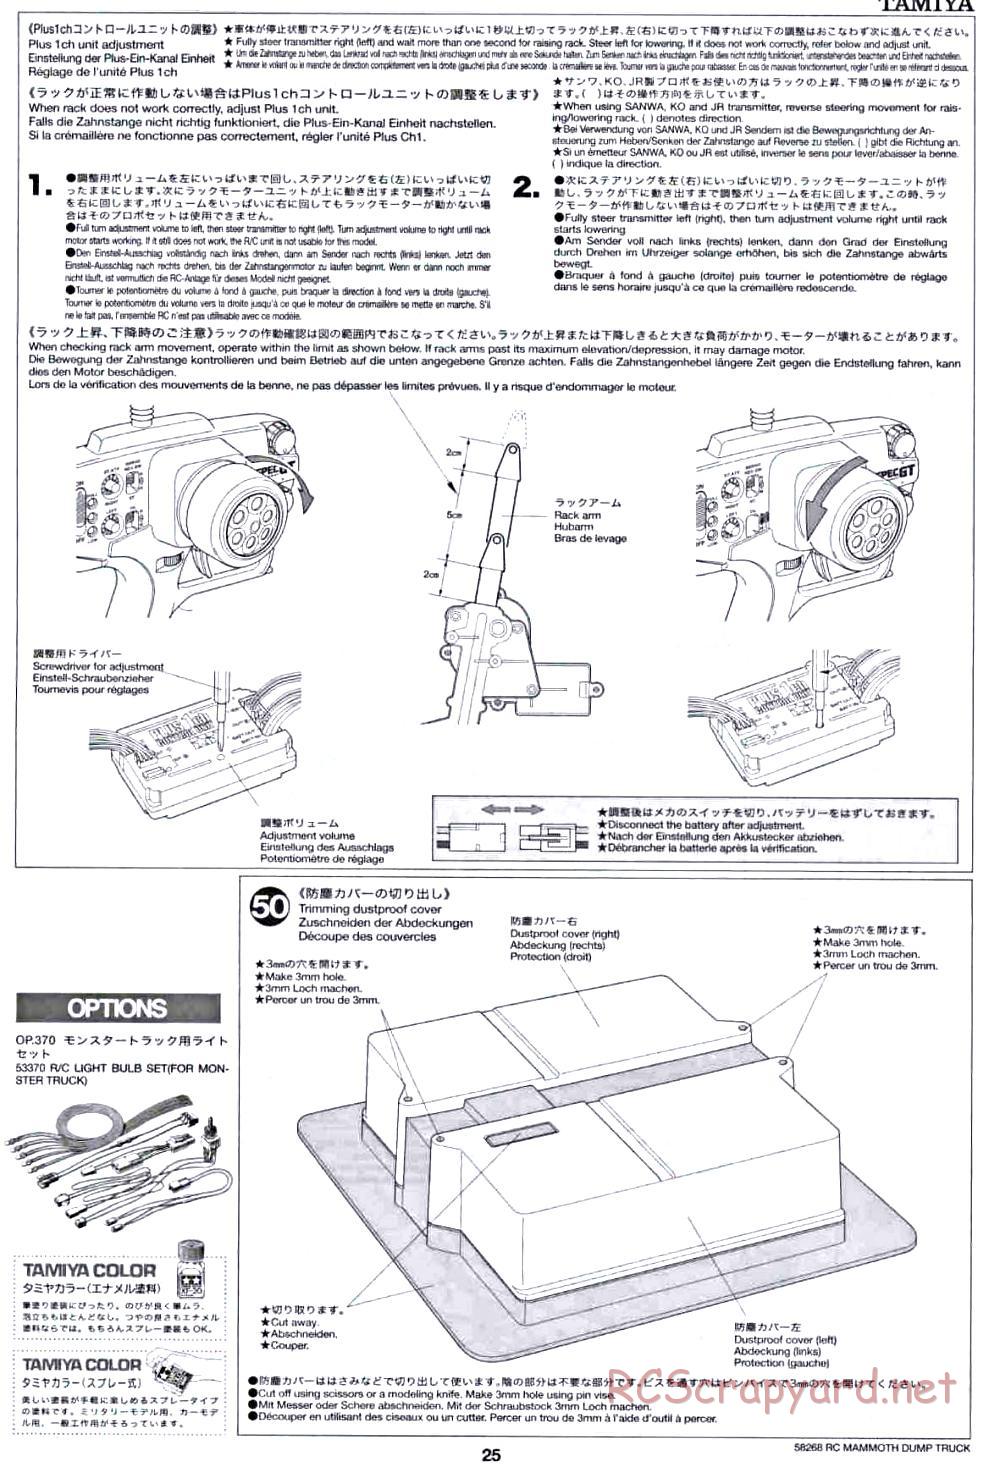 Tamiya - Mammoth Dump Truck Chassis - Manual - Page 25